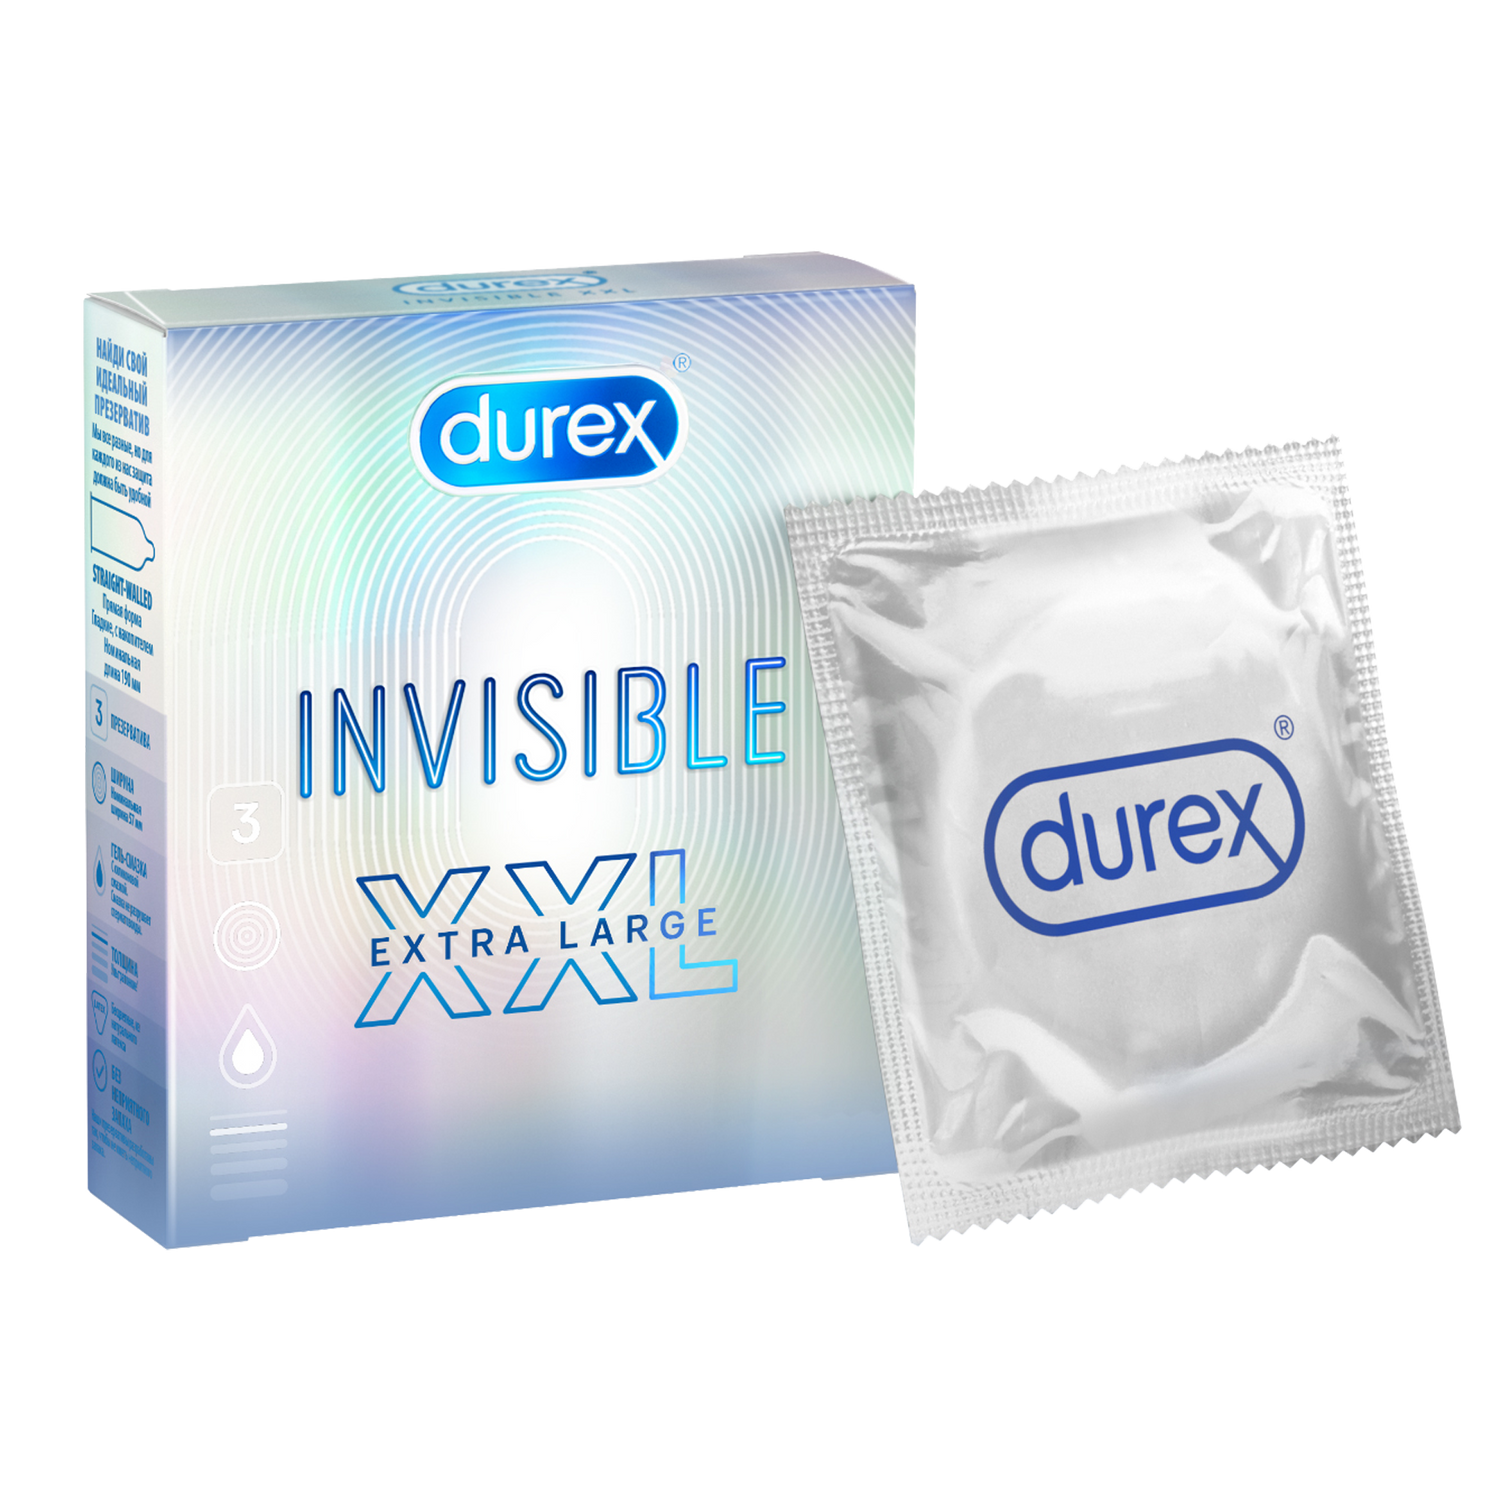 Durex Invisible XXL, презервативы, 3 шт.